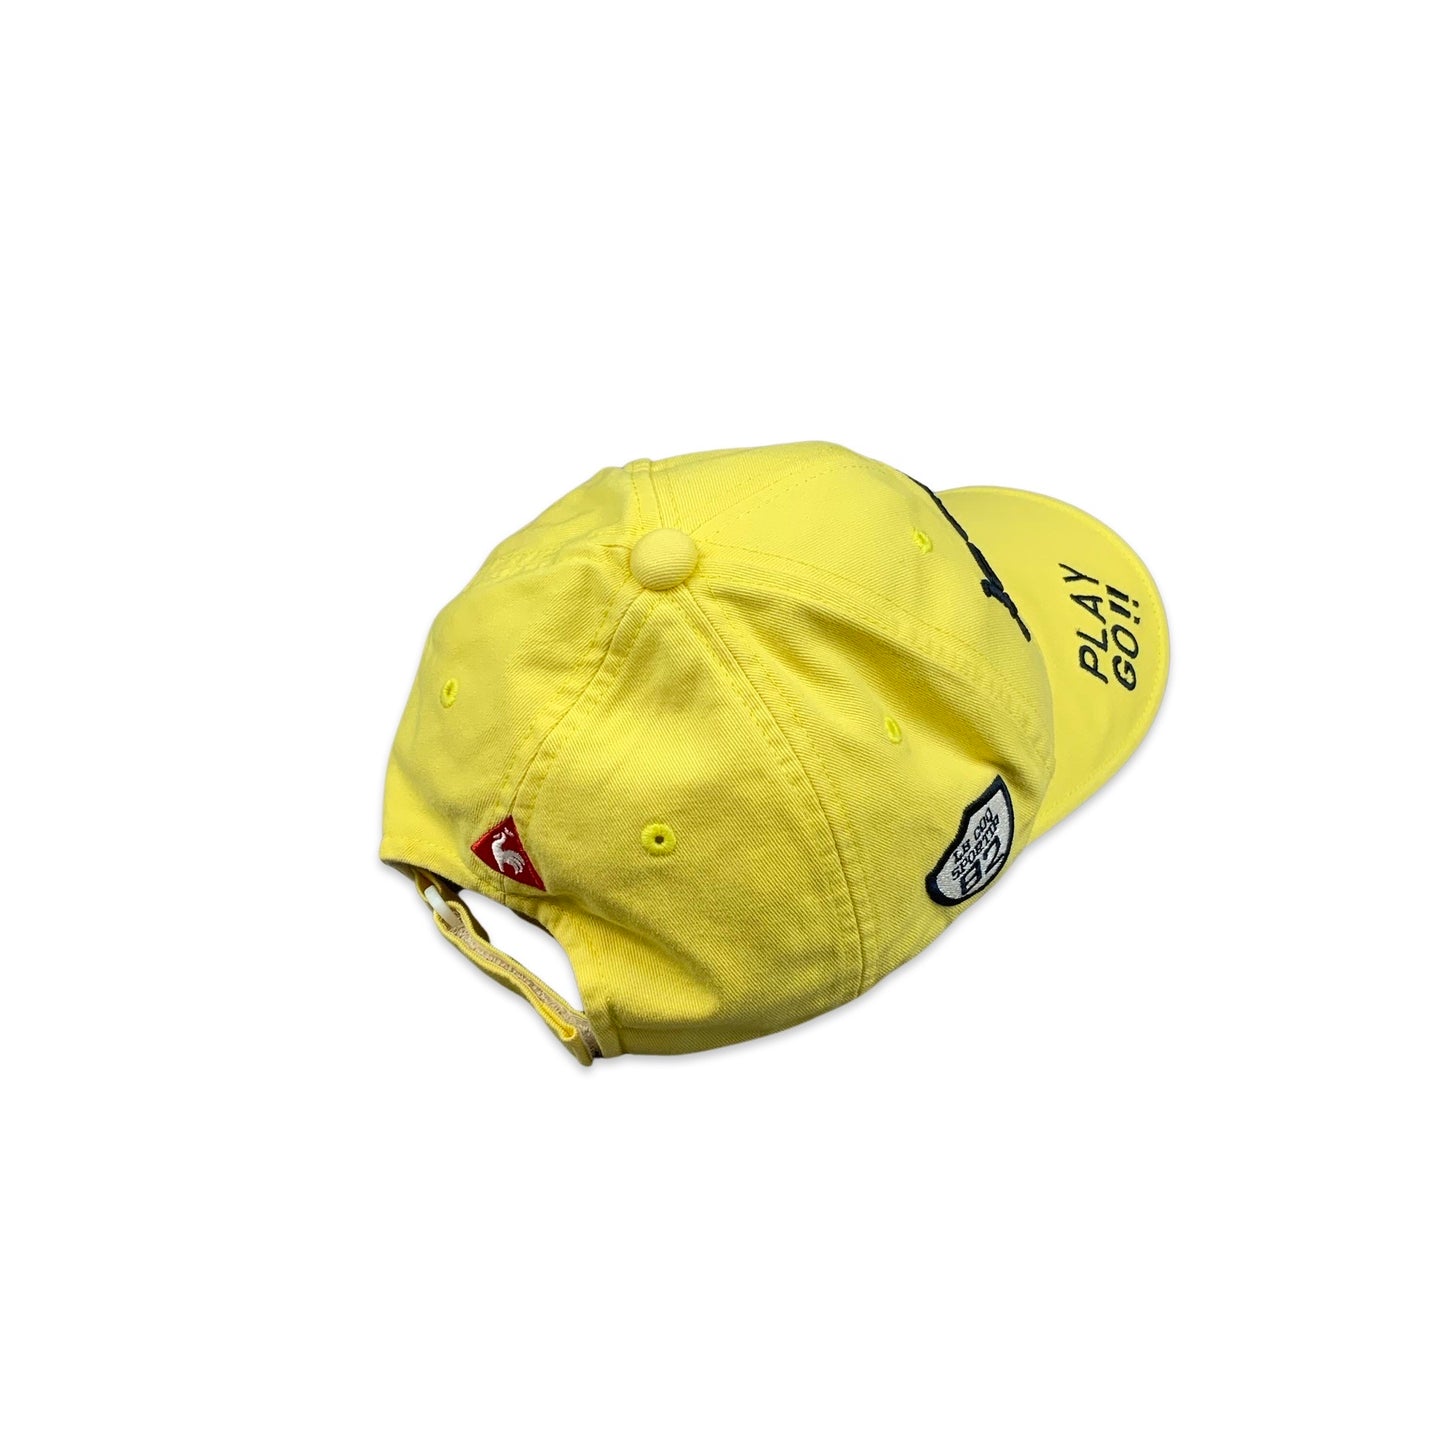 Le Coq Sportif Yellow Baseball Cap